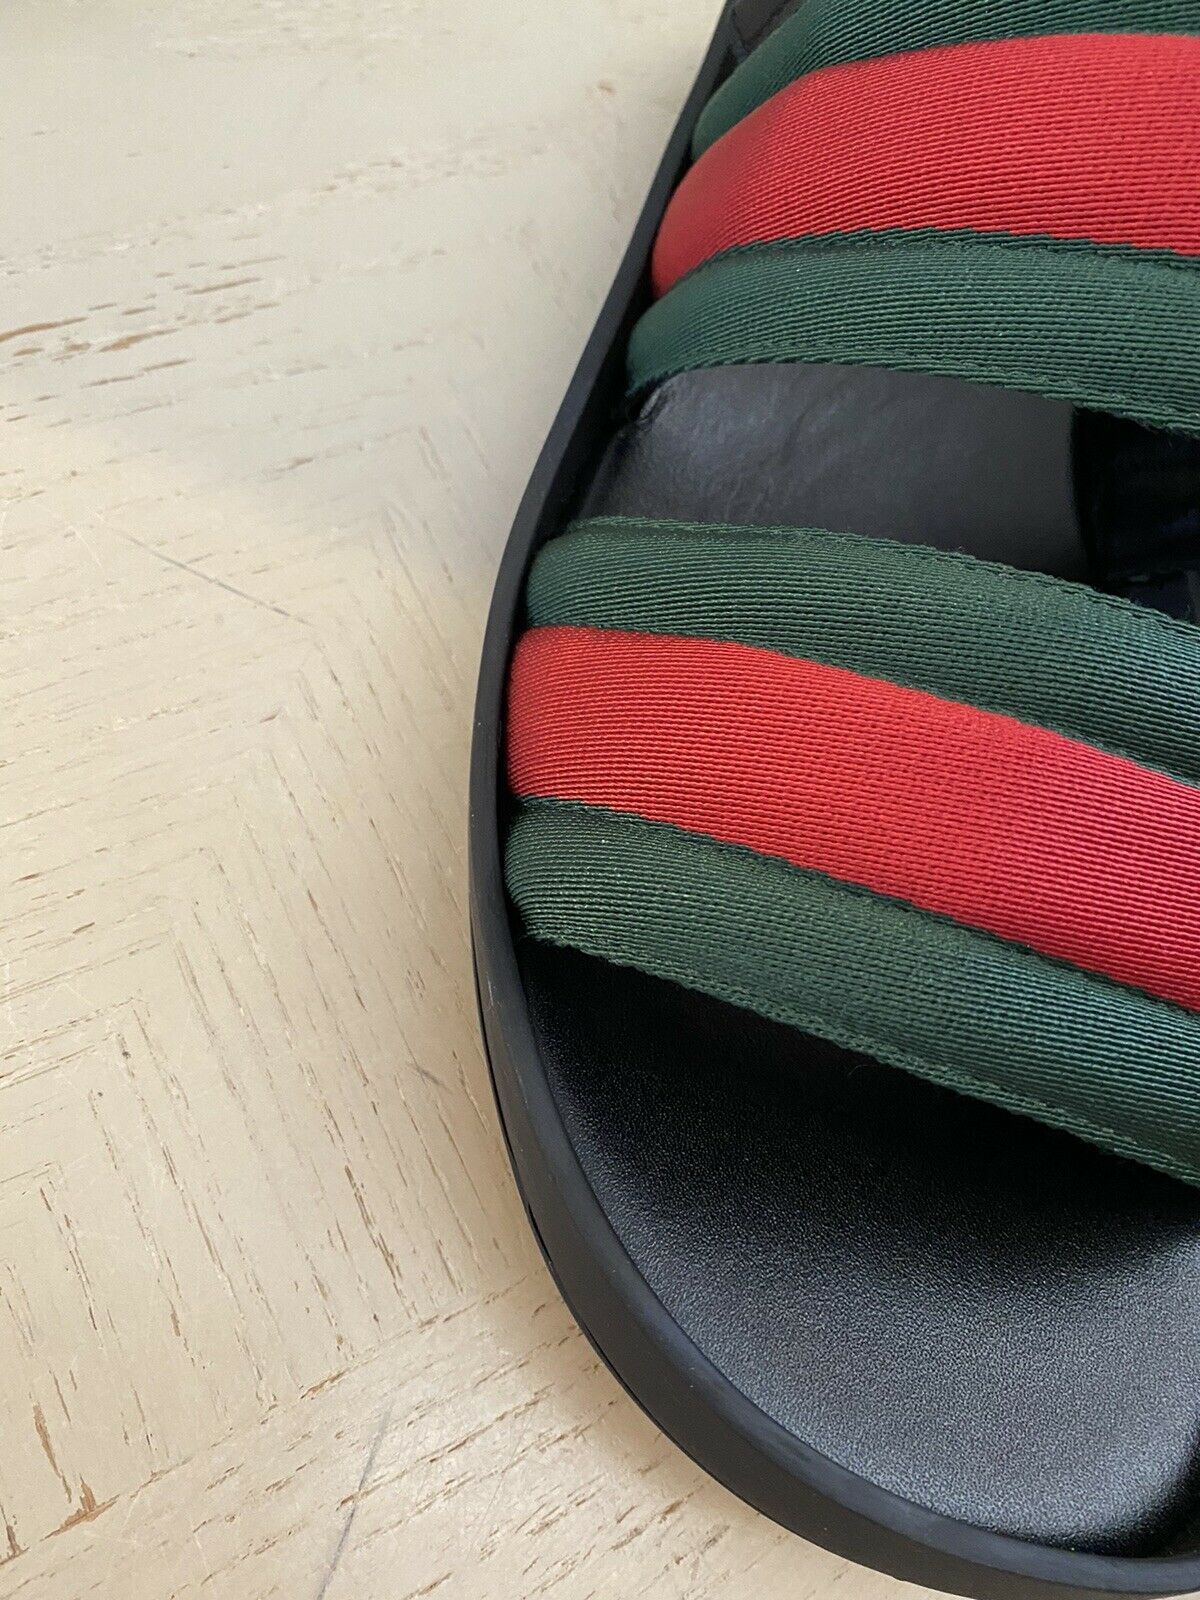 NIB Gucci Mens Sandal Shoes Green/Red/Black 9 US/8 UK Italy